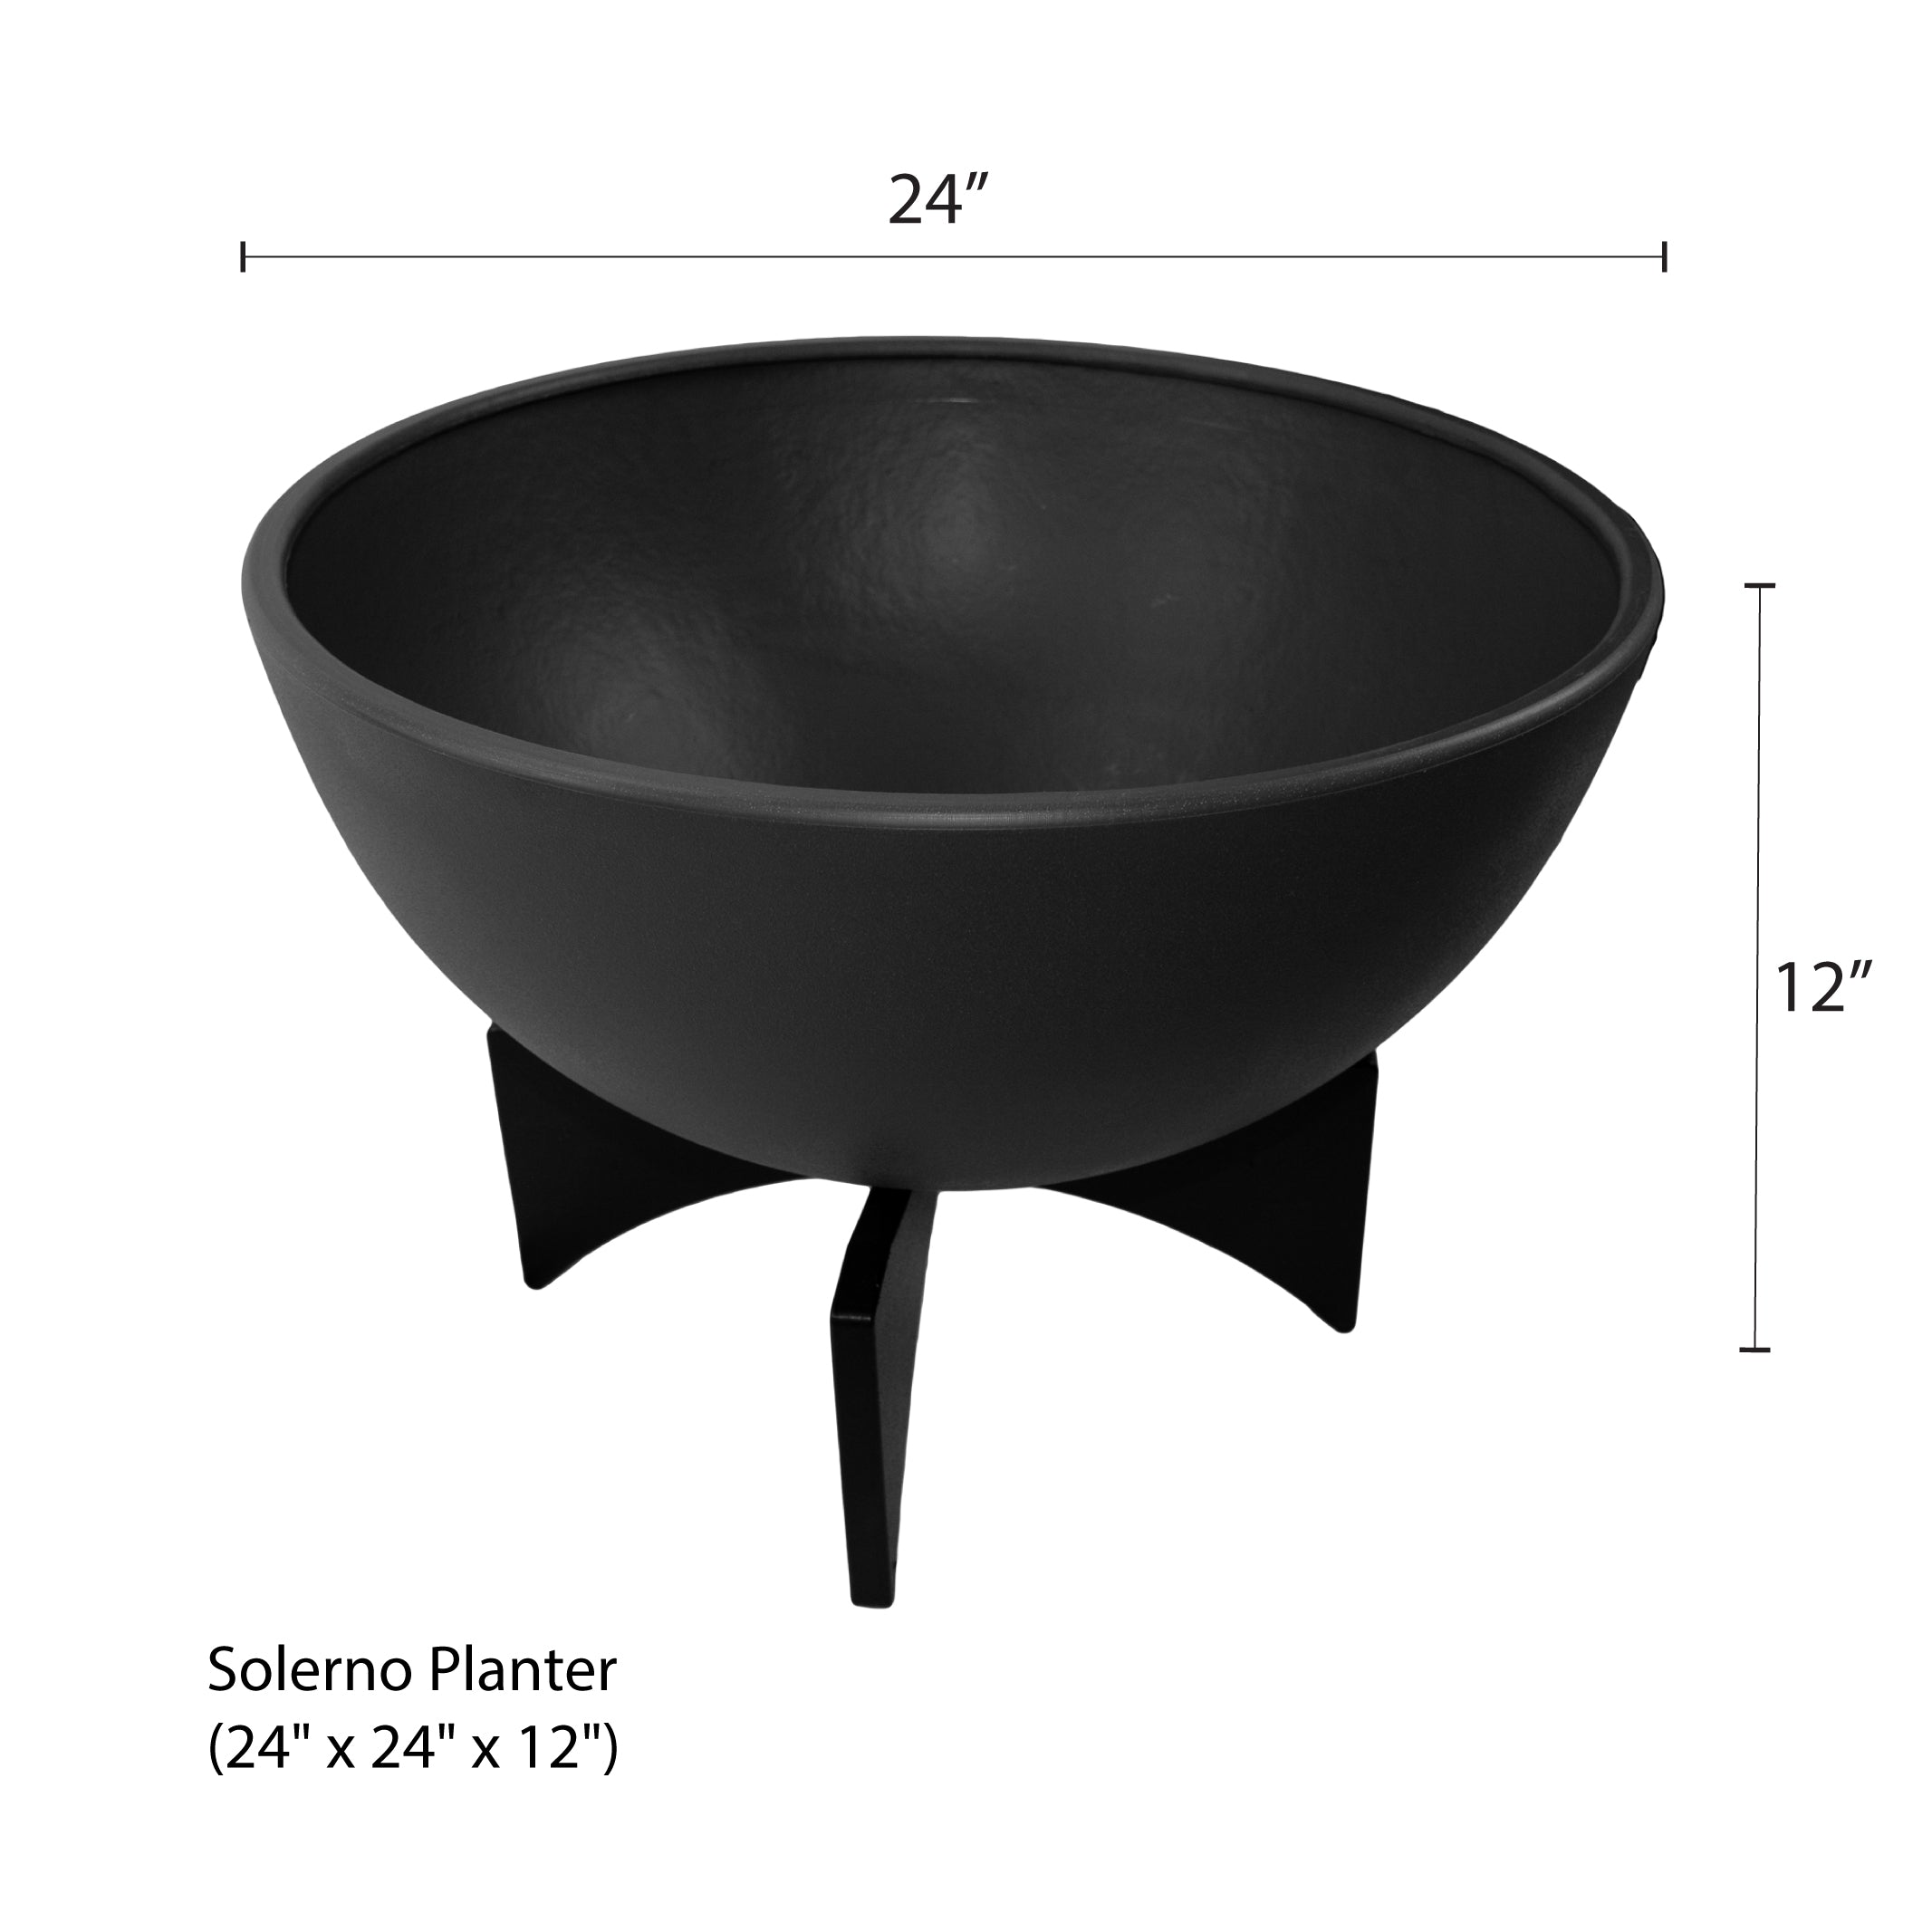 Black half dome solerno planter with measurements (small)